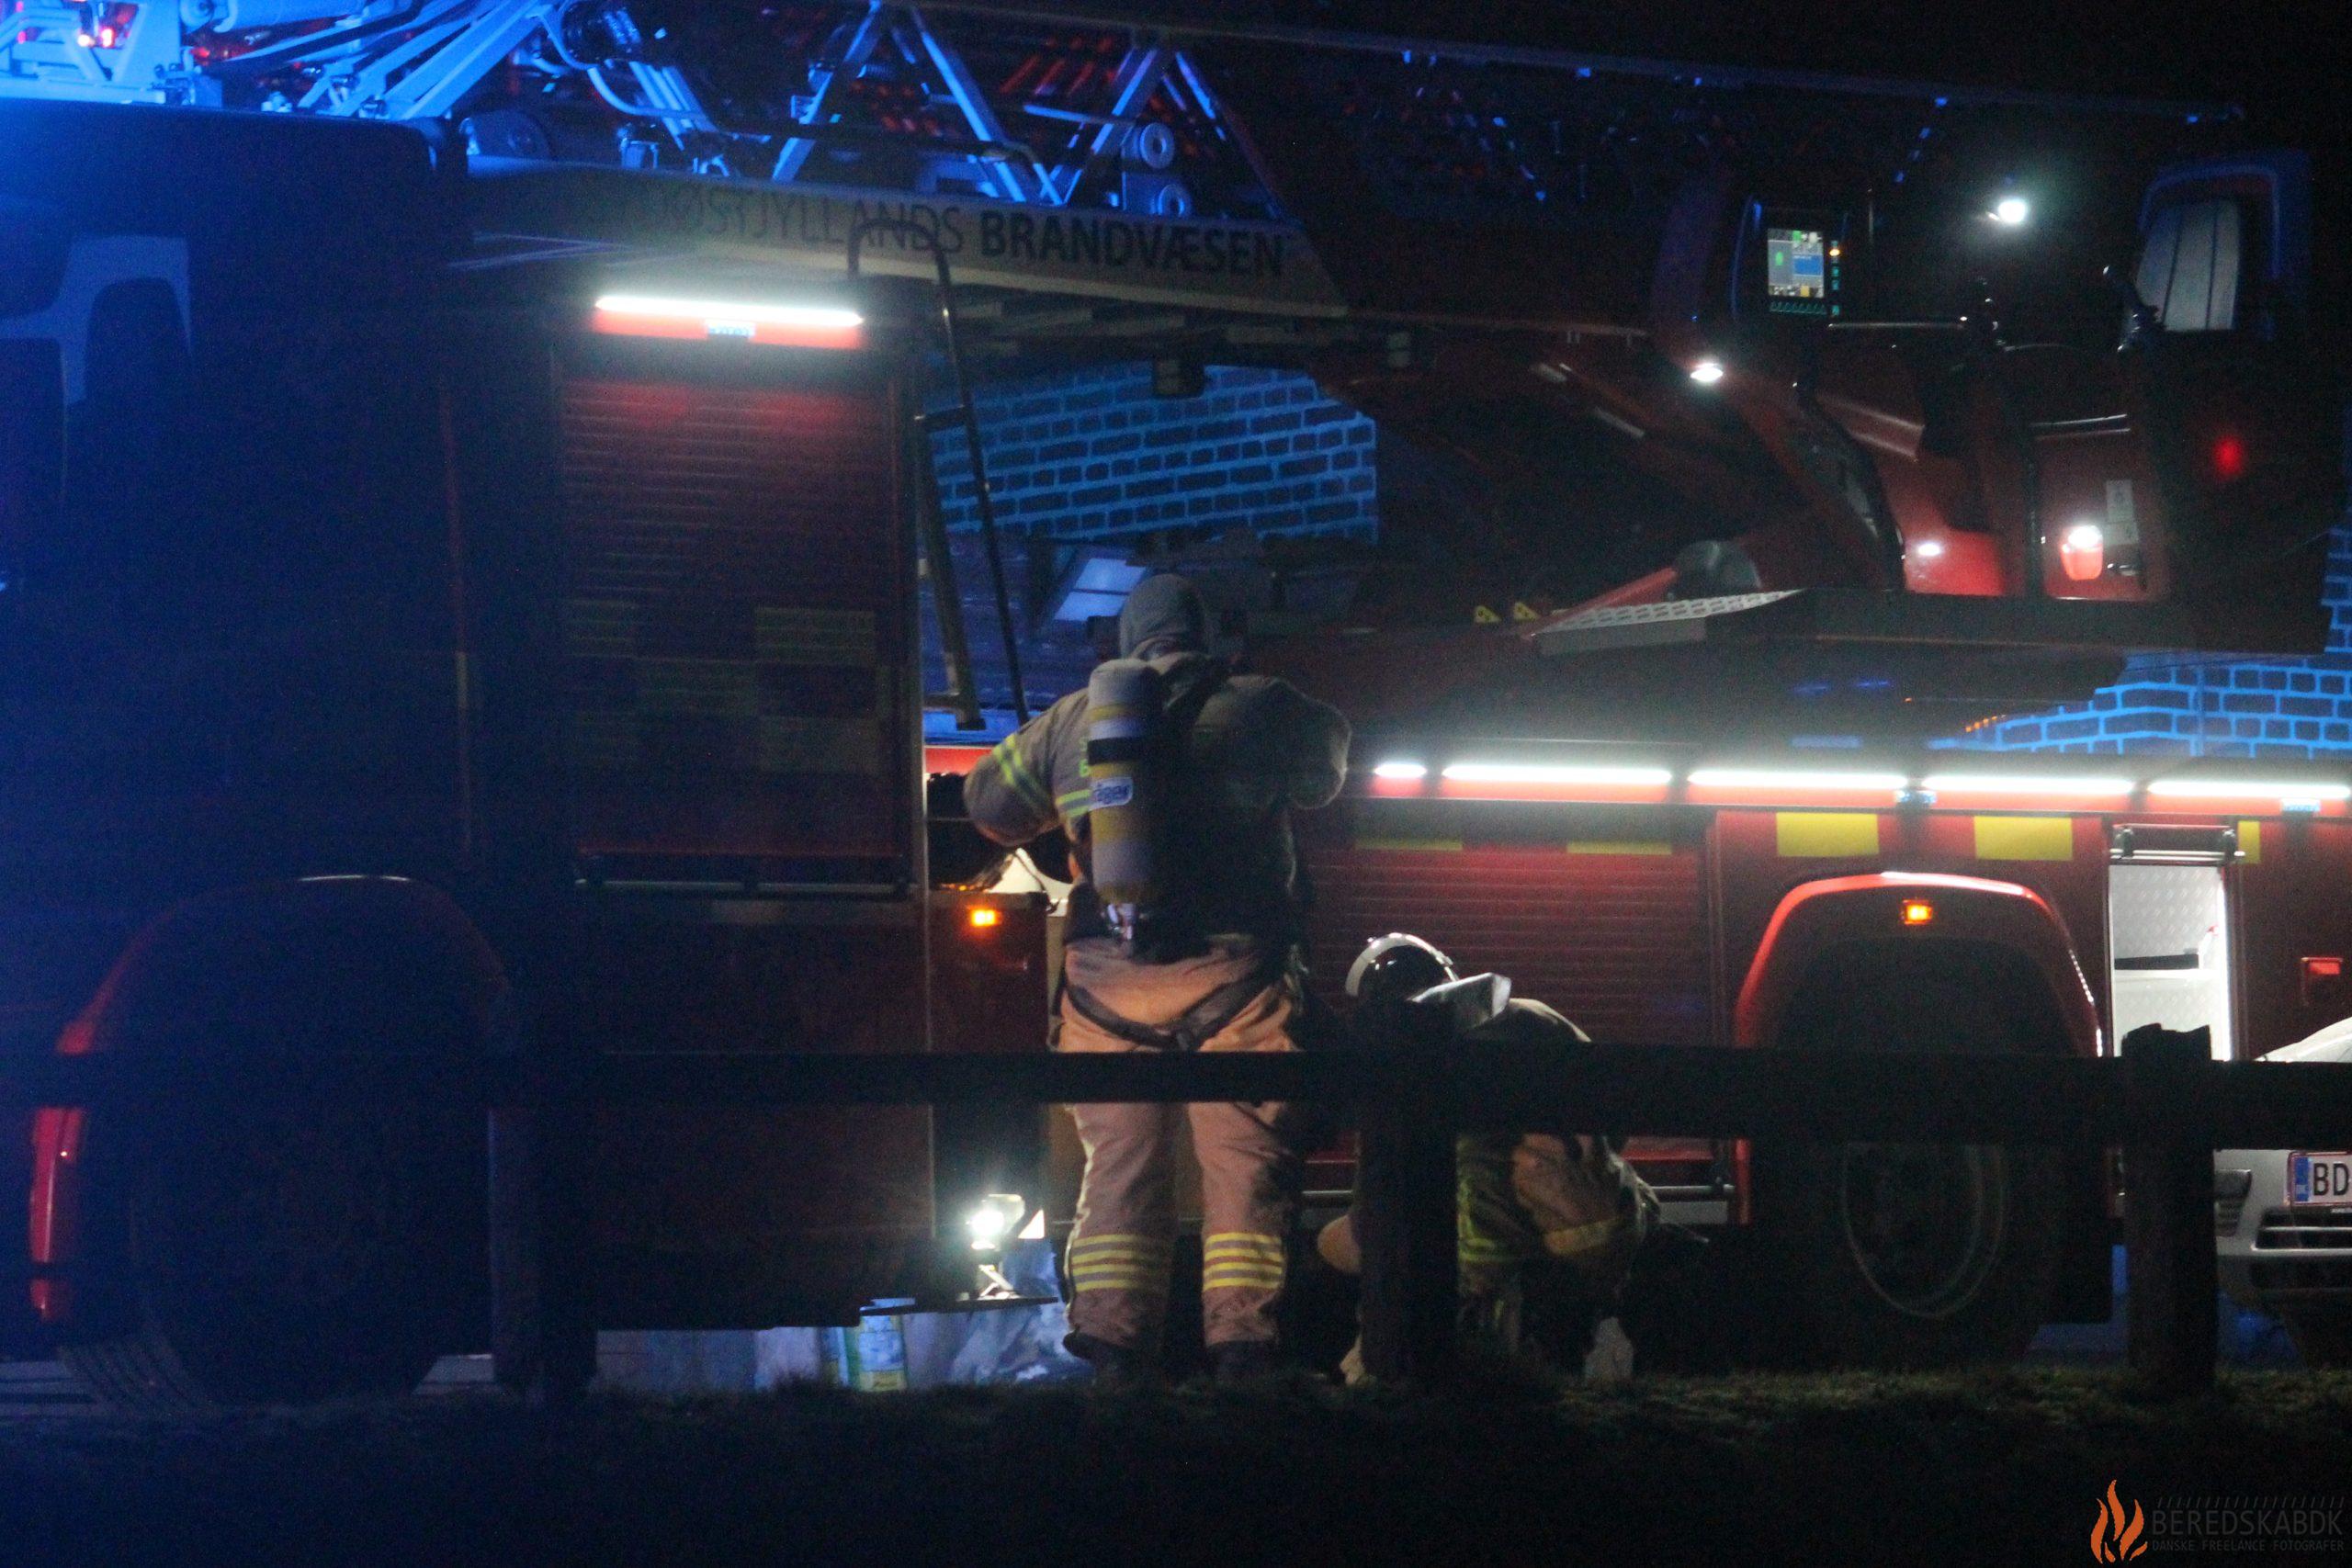 24/01-22 Brand i skorsten på Silkeborgvej ved Nim